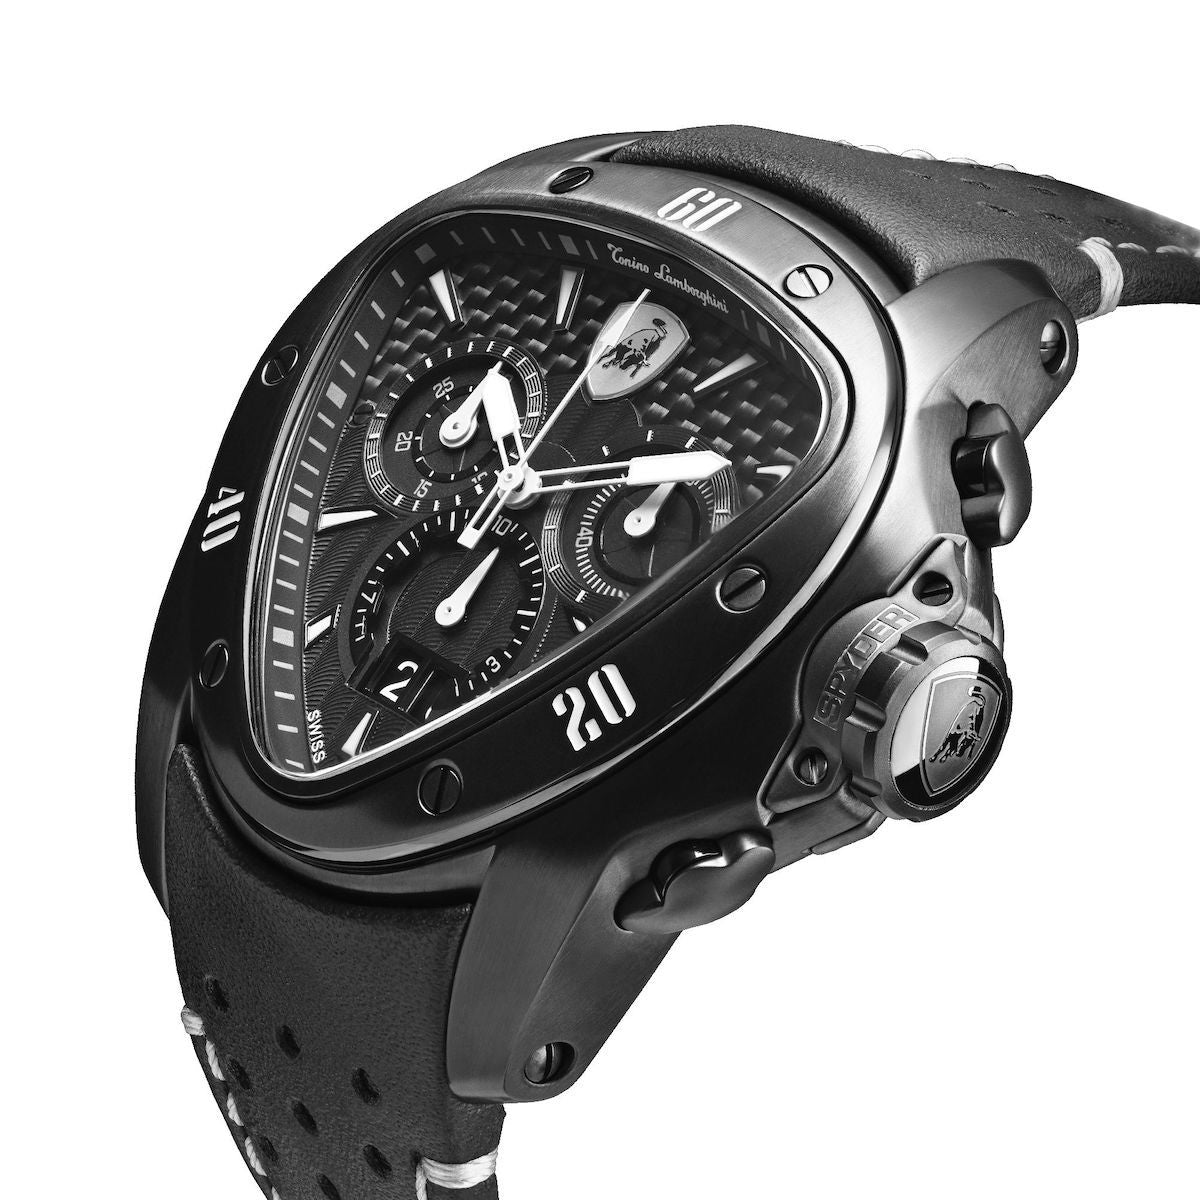 TONINO LAMBORGHINI Spyder BLACK Black/White/Leather Watch